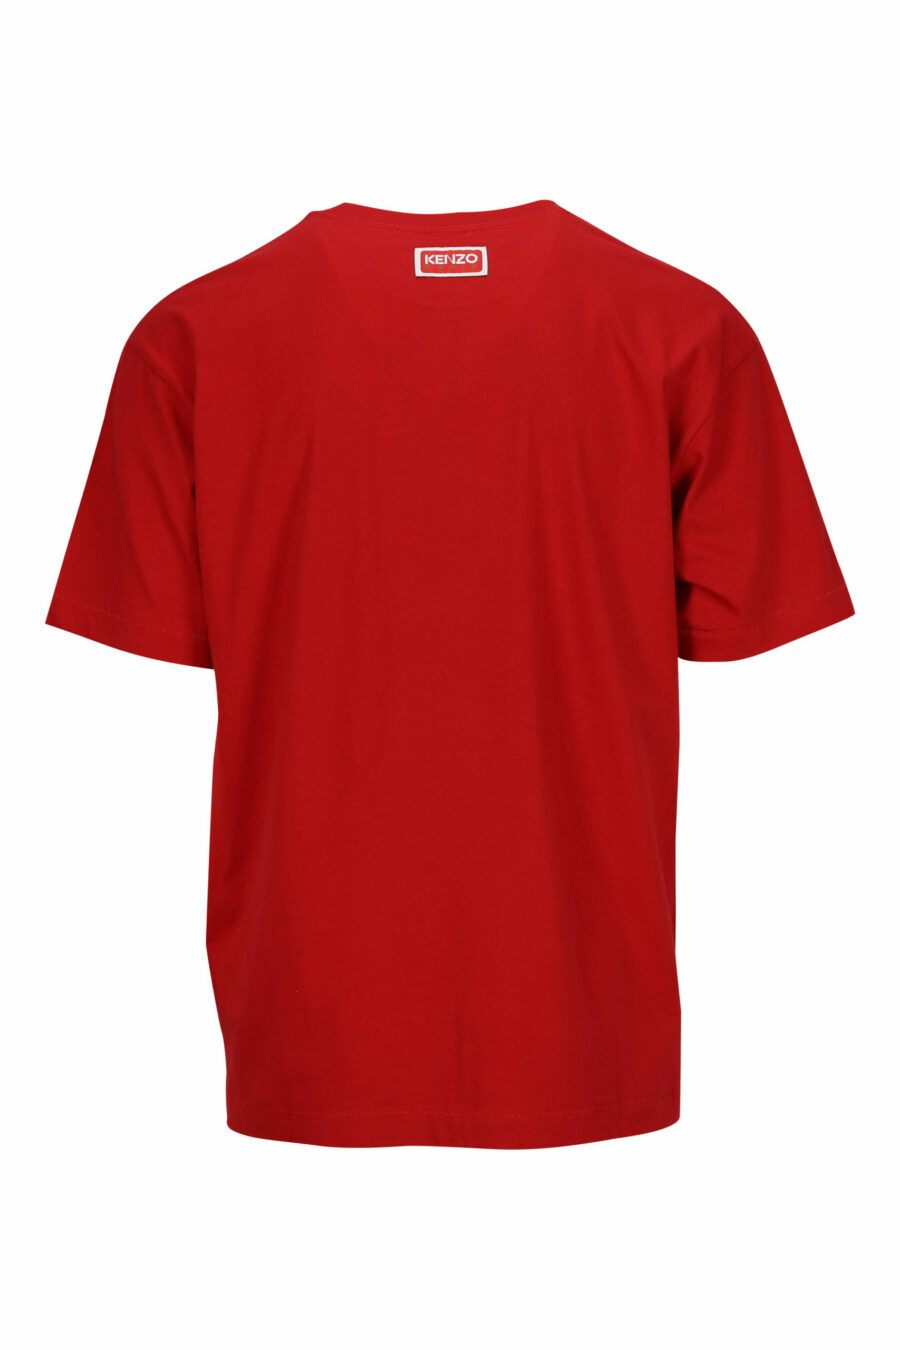 Oversize red T-shirt with large elephant embossed logo - 3612230568877 1 scaled